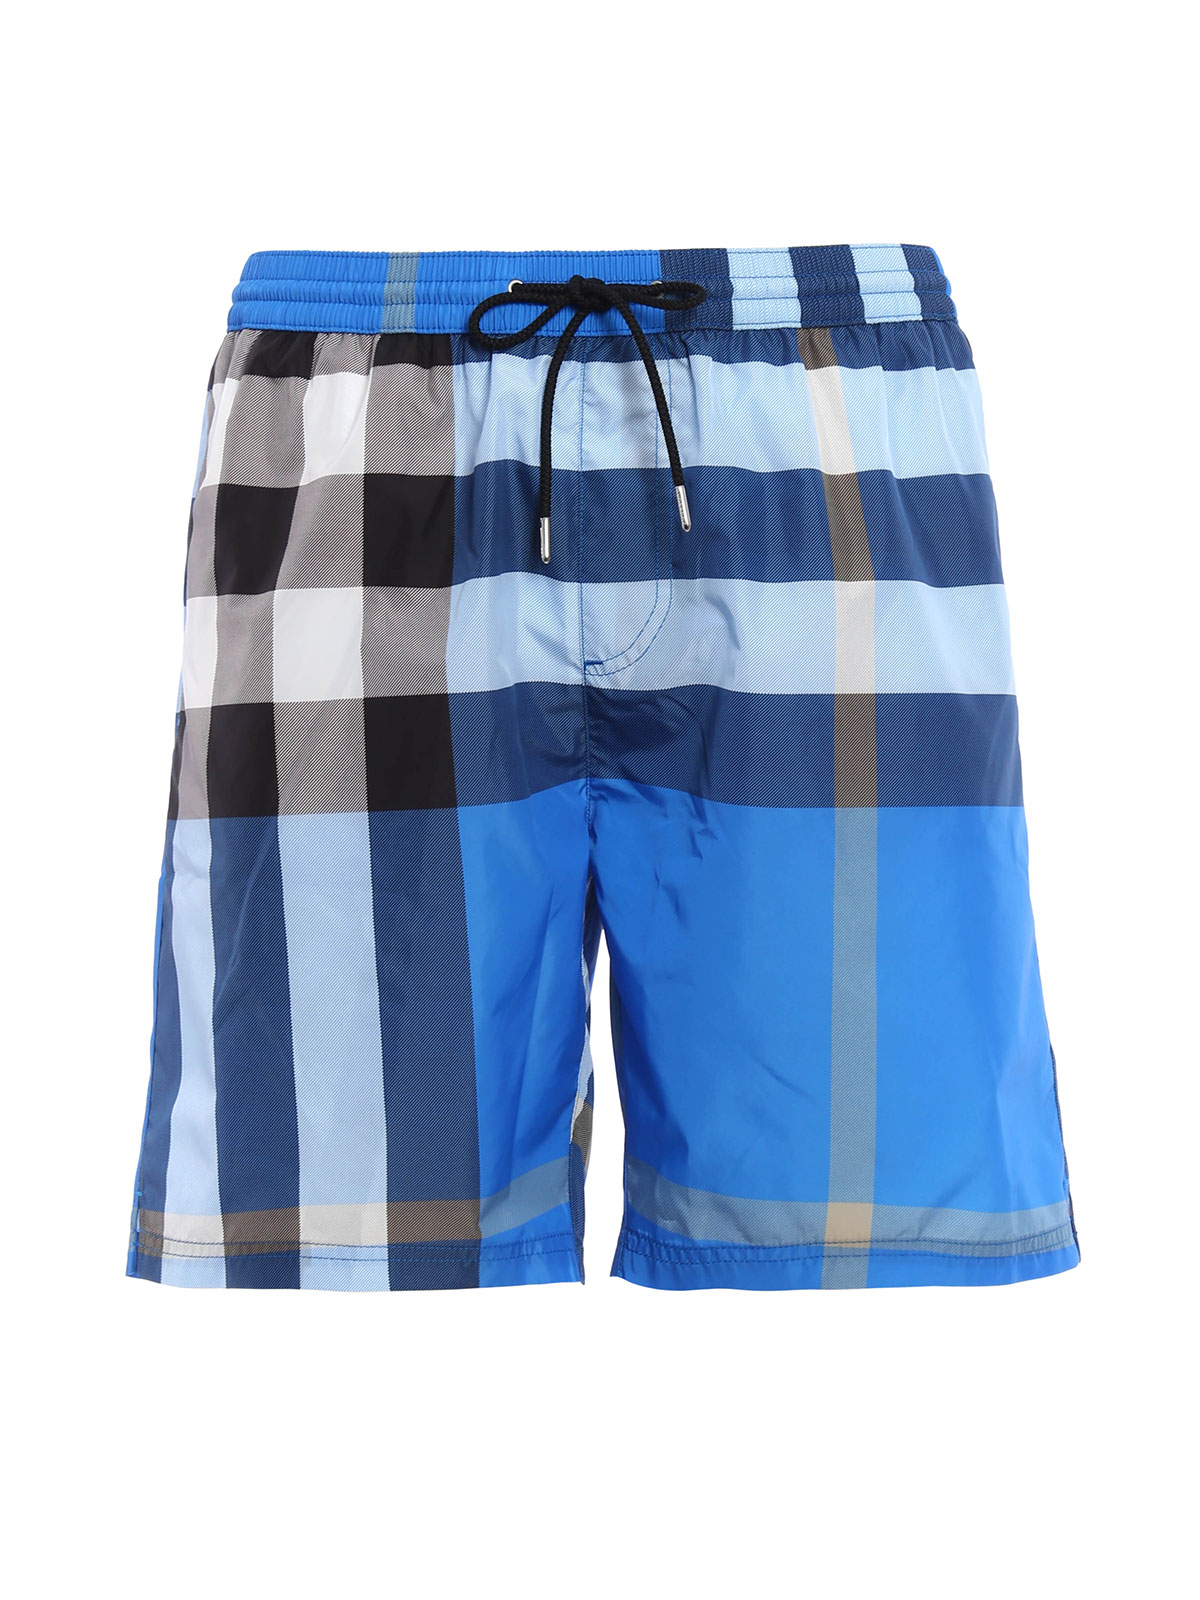 burberry swim shorts blue